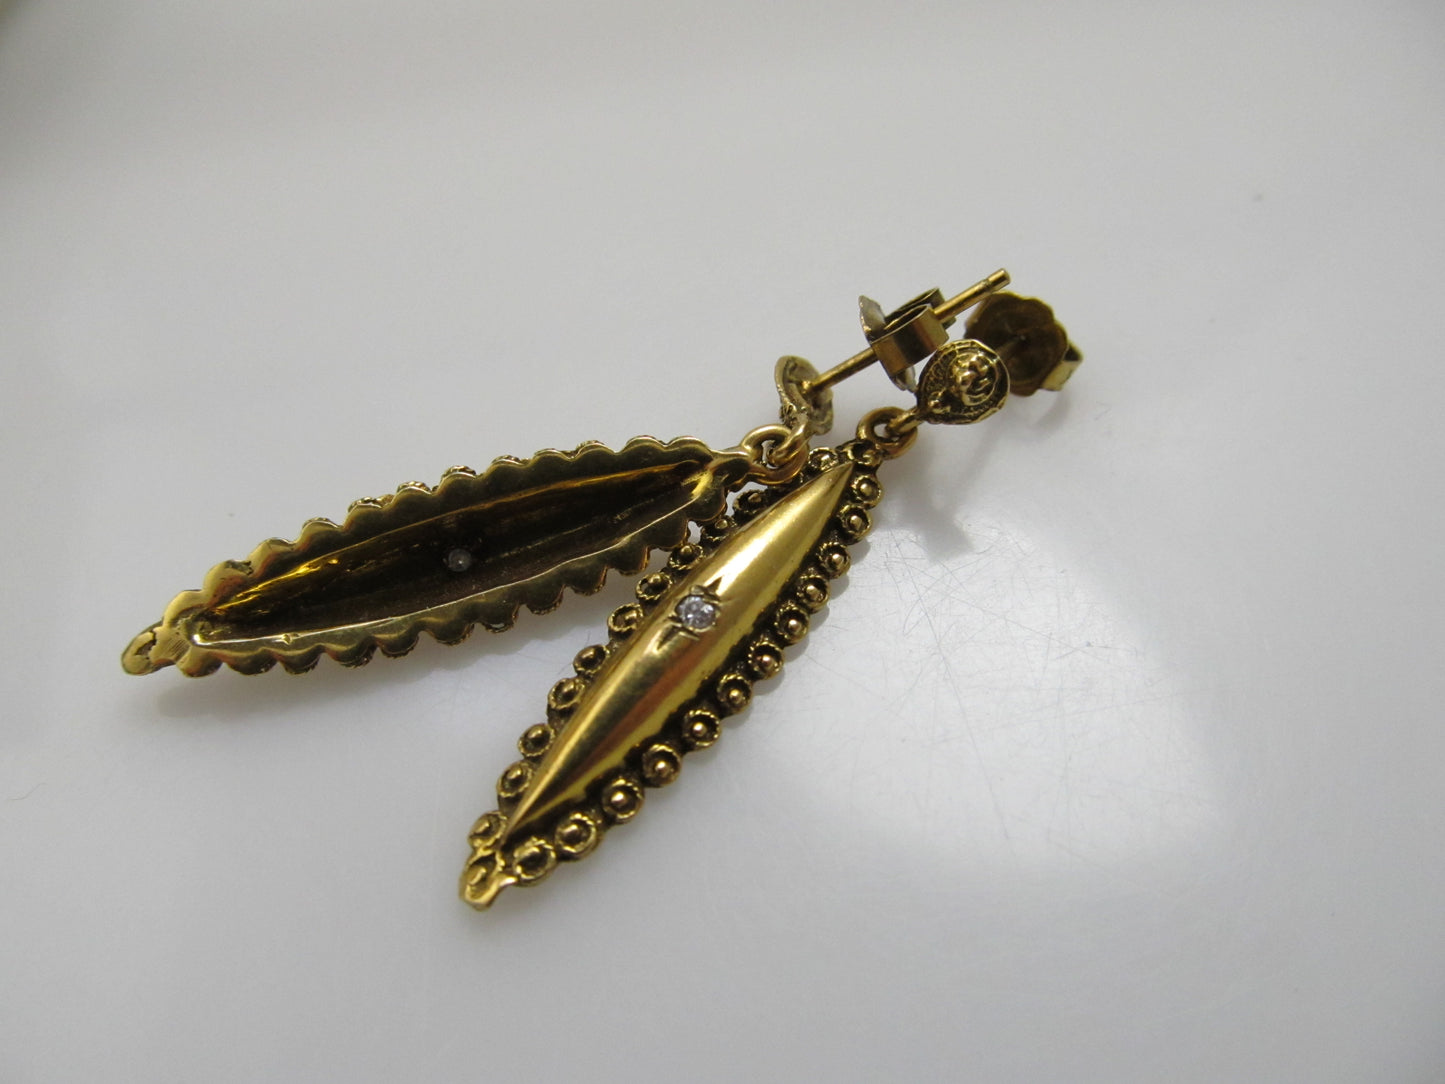 Vintage yellow gold drop earrings